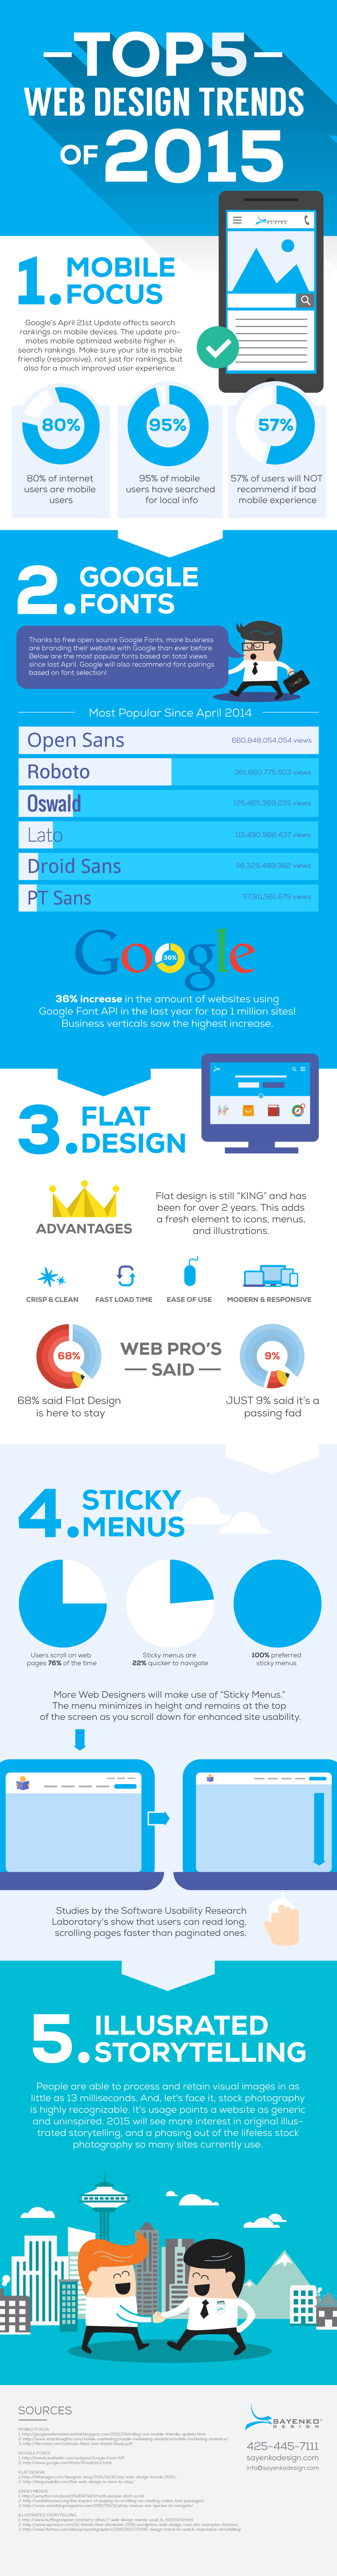 tendances webdesign 2015